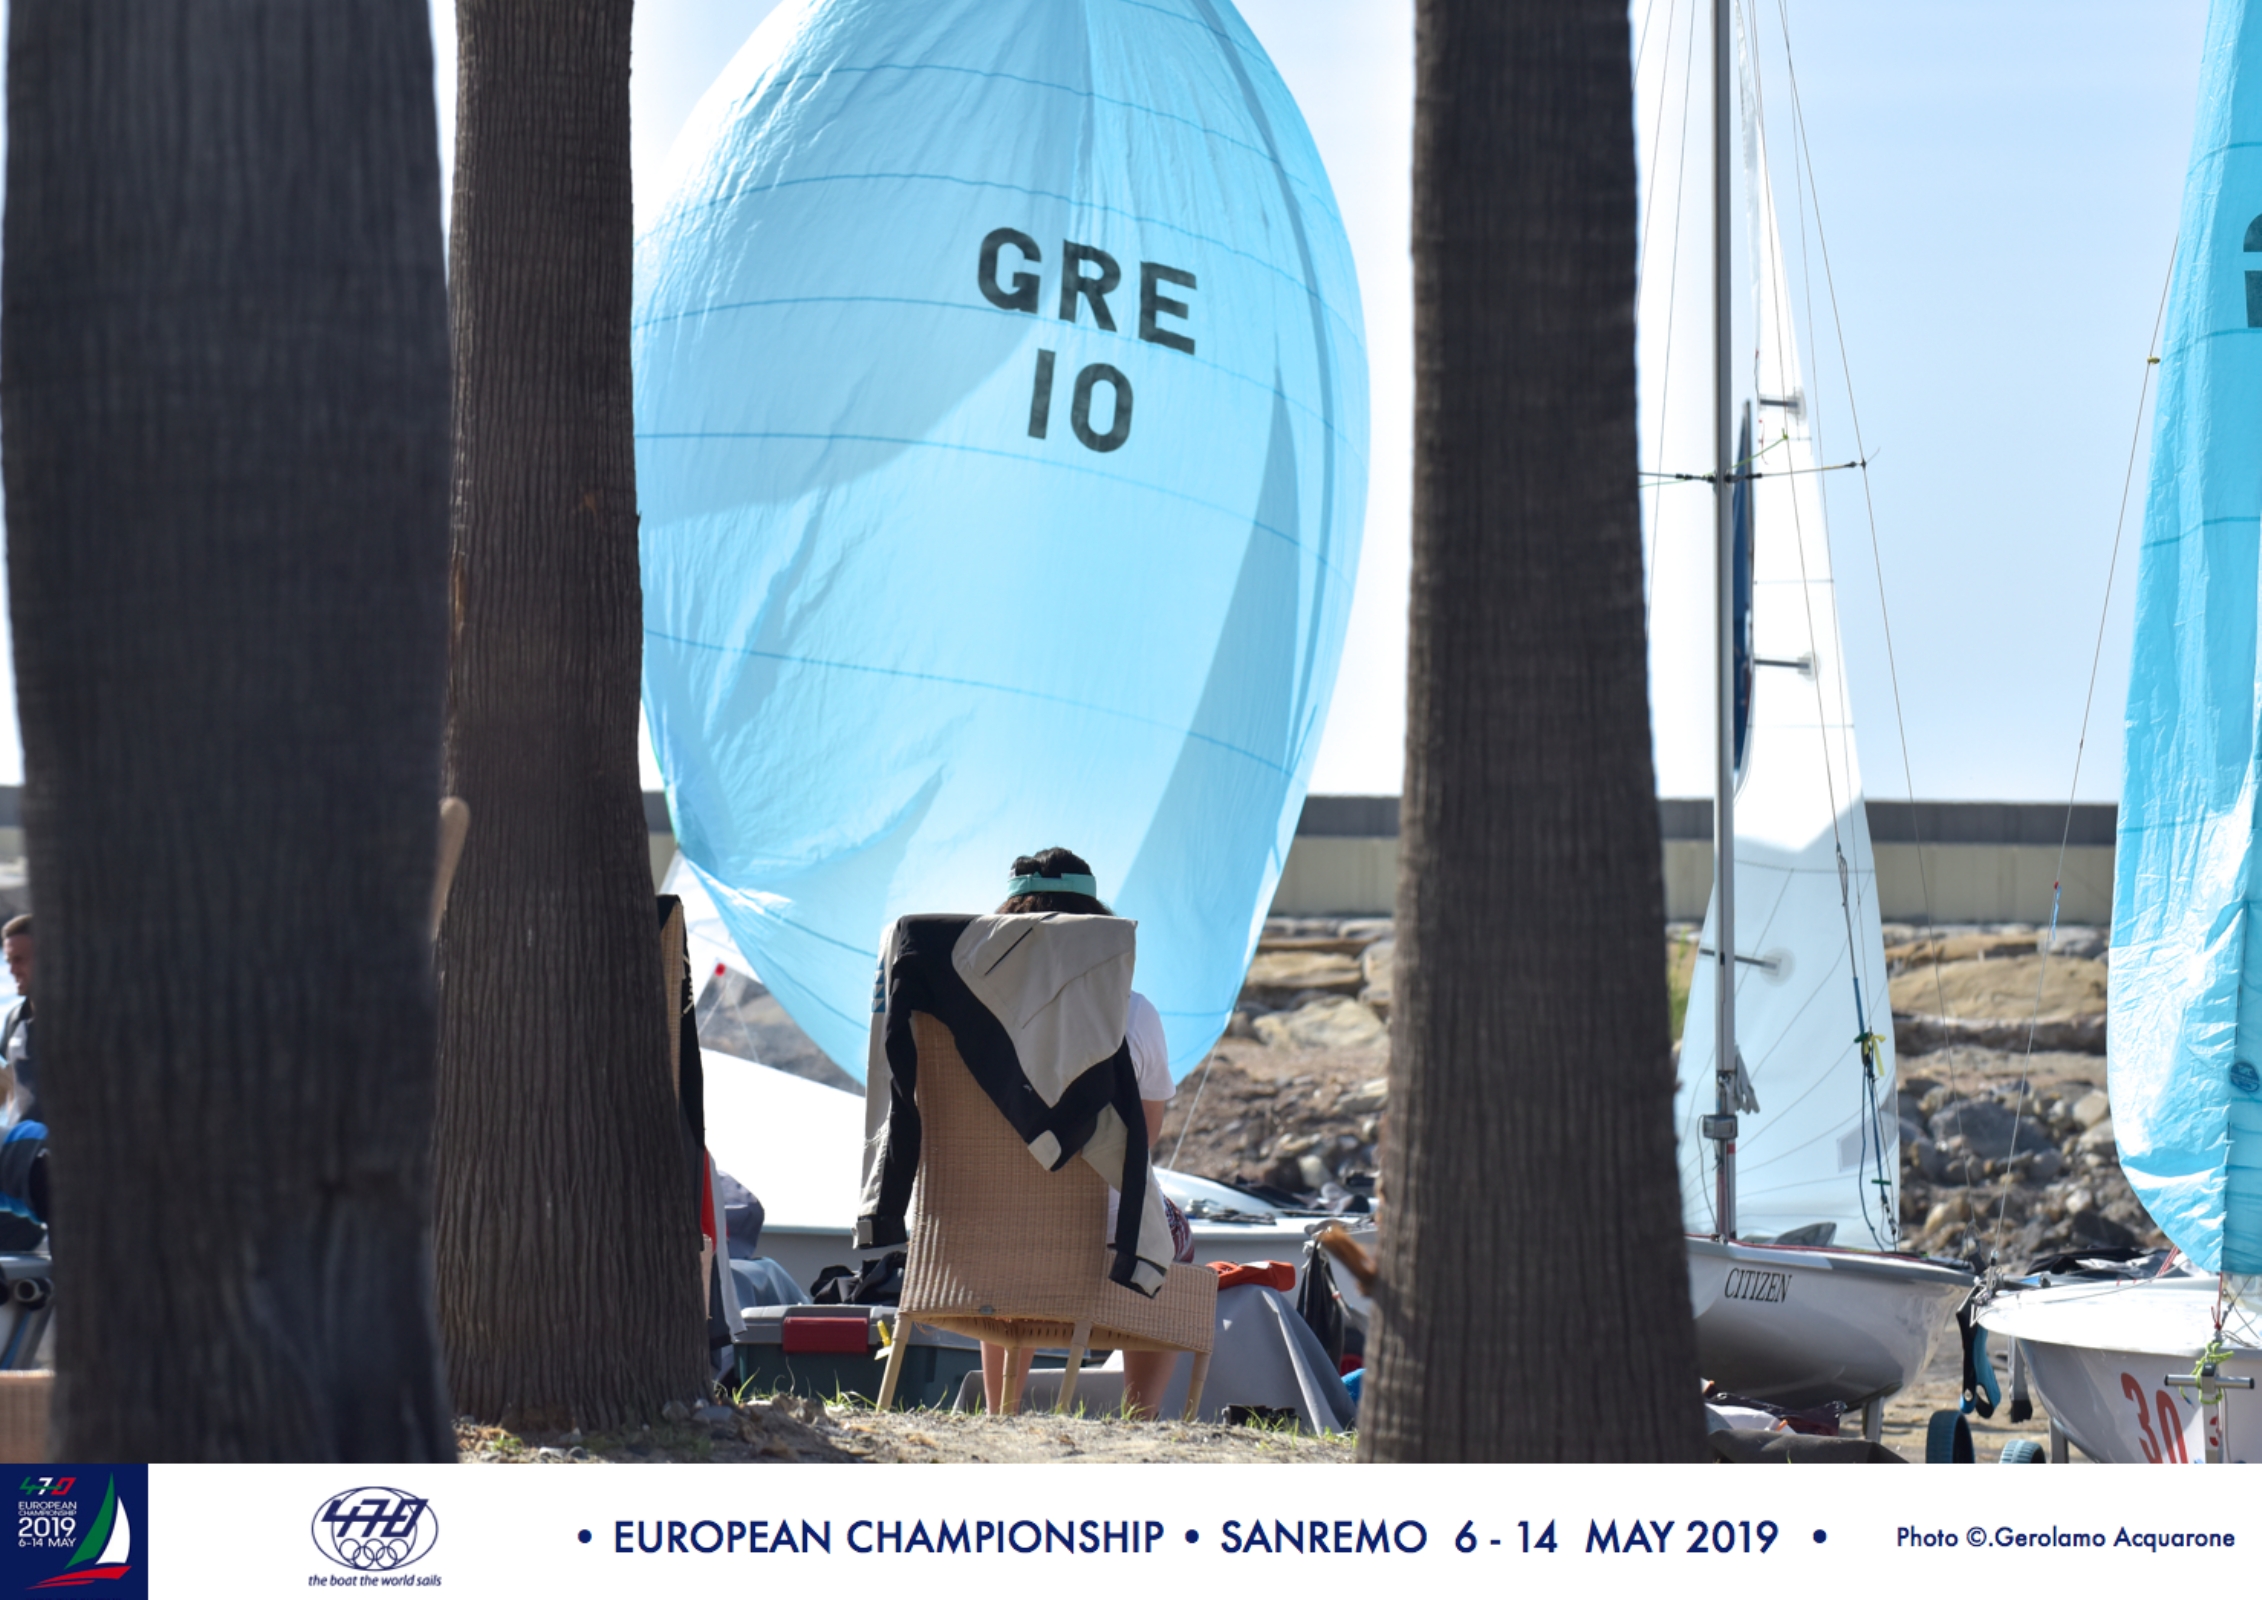  470  European Championship 2019  San Remo ITA  Day 2  No wind